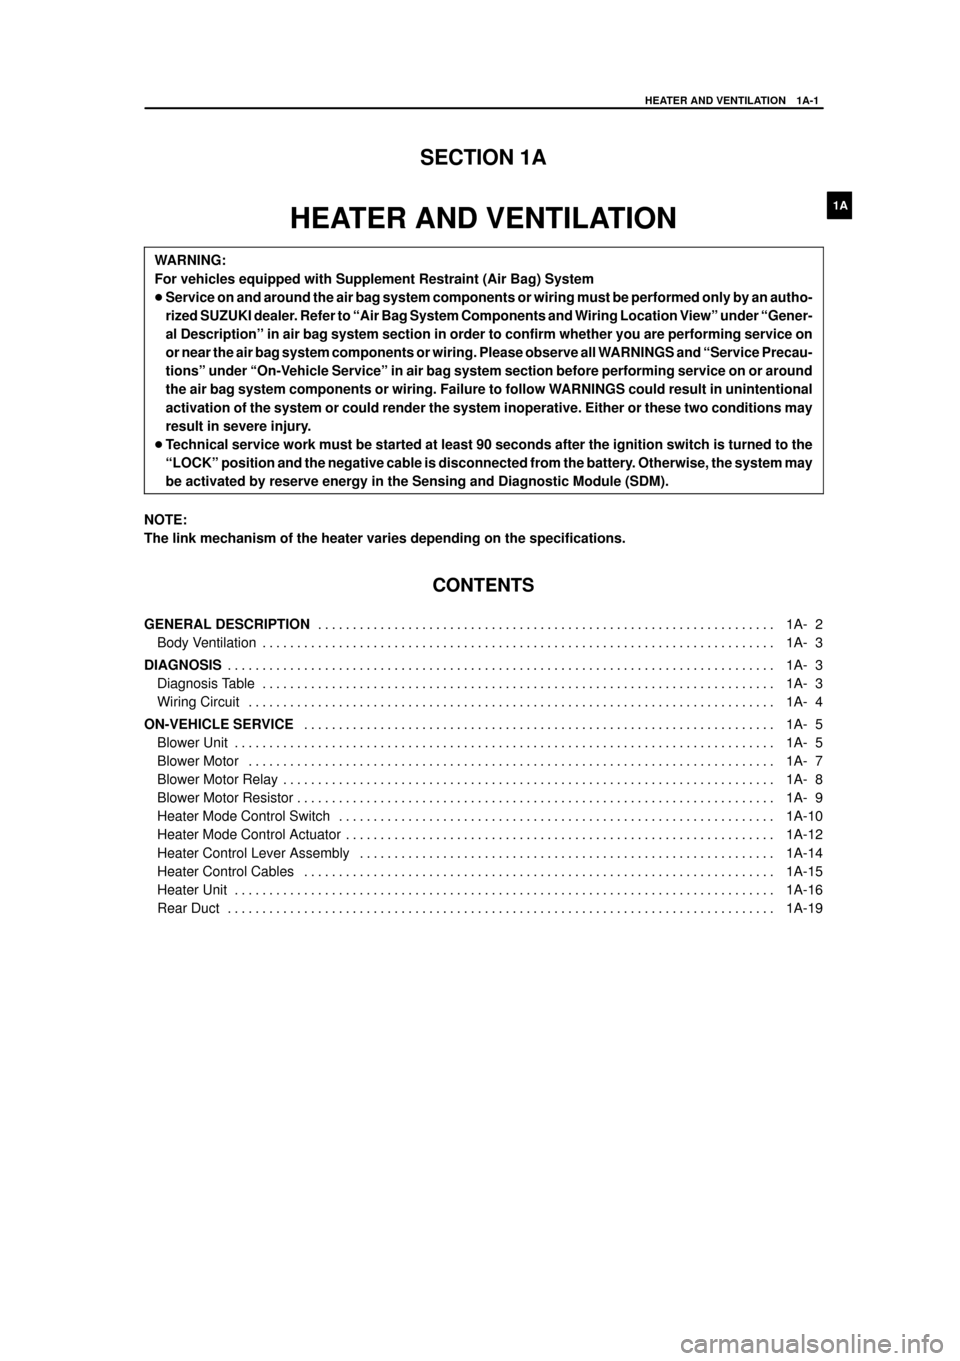 SUZUKI GRAND VITARA 2005 2.G Service Workshop Manual YH4
GRAND
VITARA
1A
HEATER AND VENTILATION 1A-1
SECTION 1A
HEATER AND VENTILATION
WARNING:
For vehicles equipped with Supplement Restraint (Air Bag) System
Service on and around the air bag system co